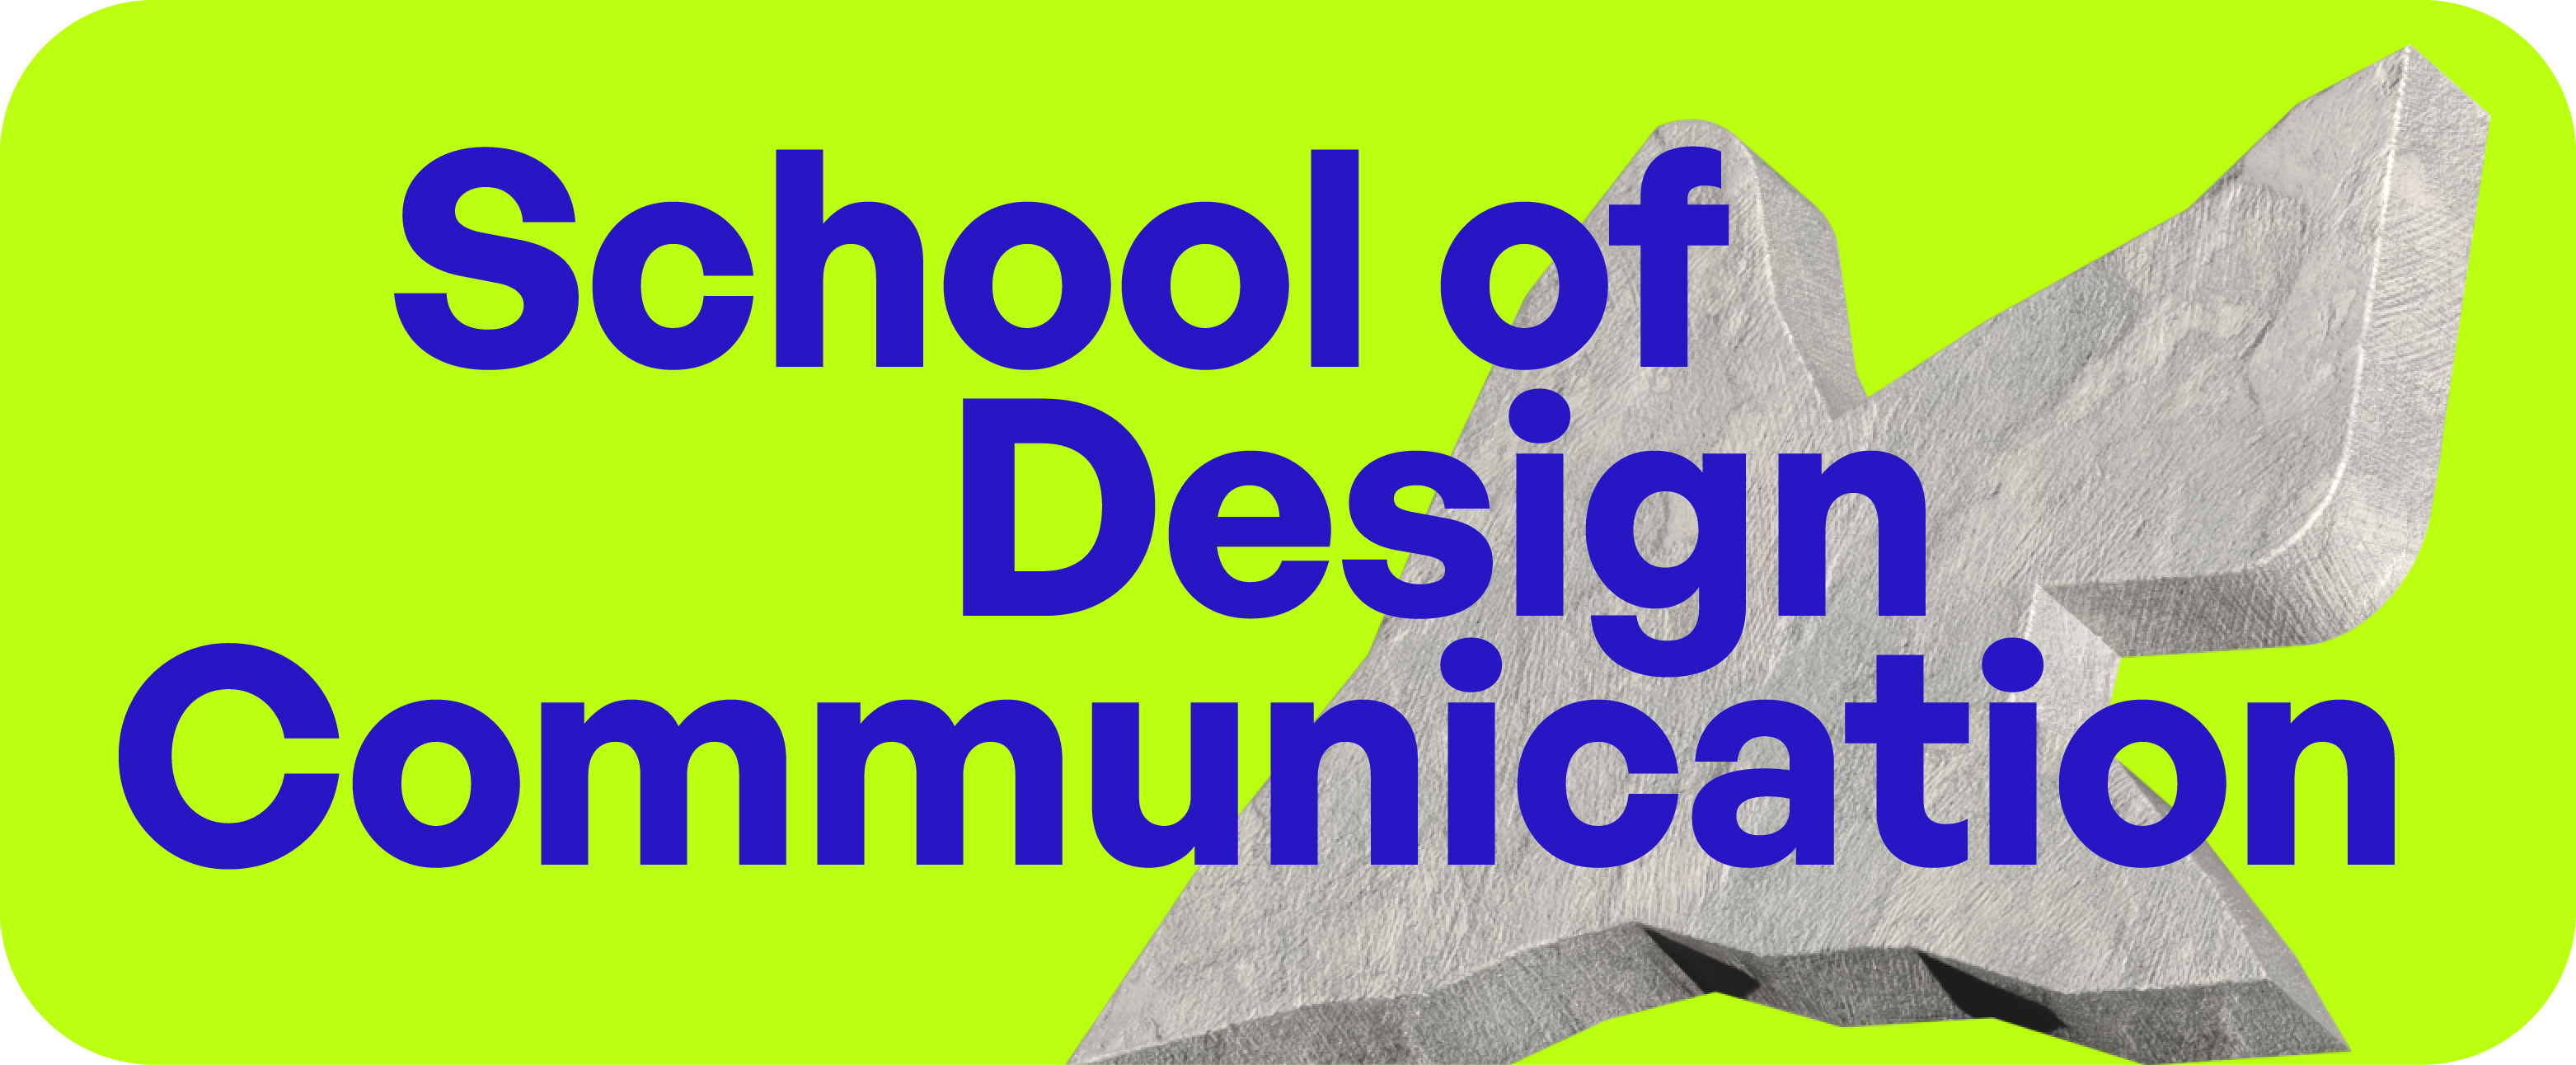 School of Design Communication